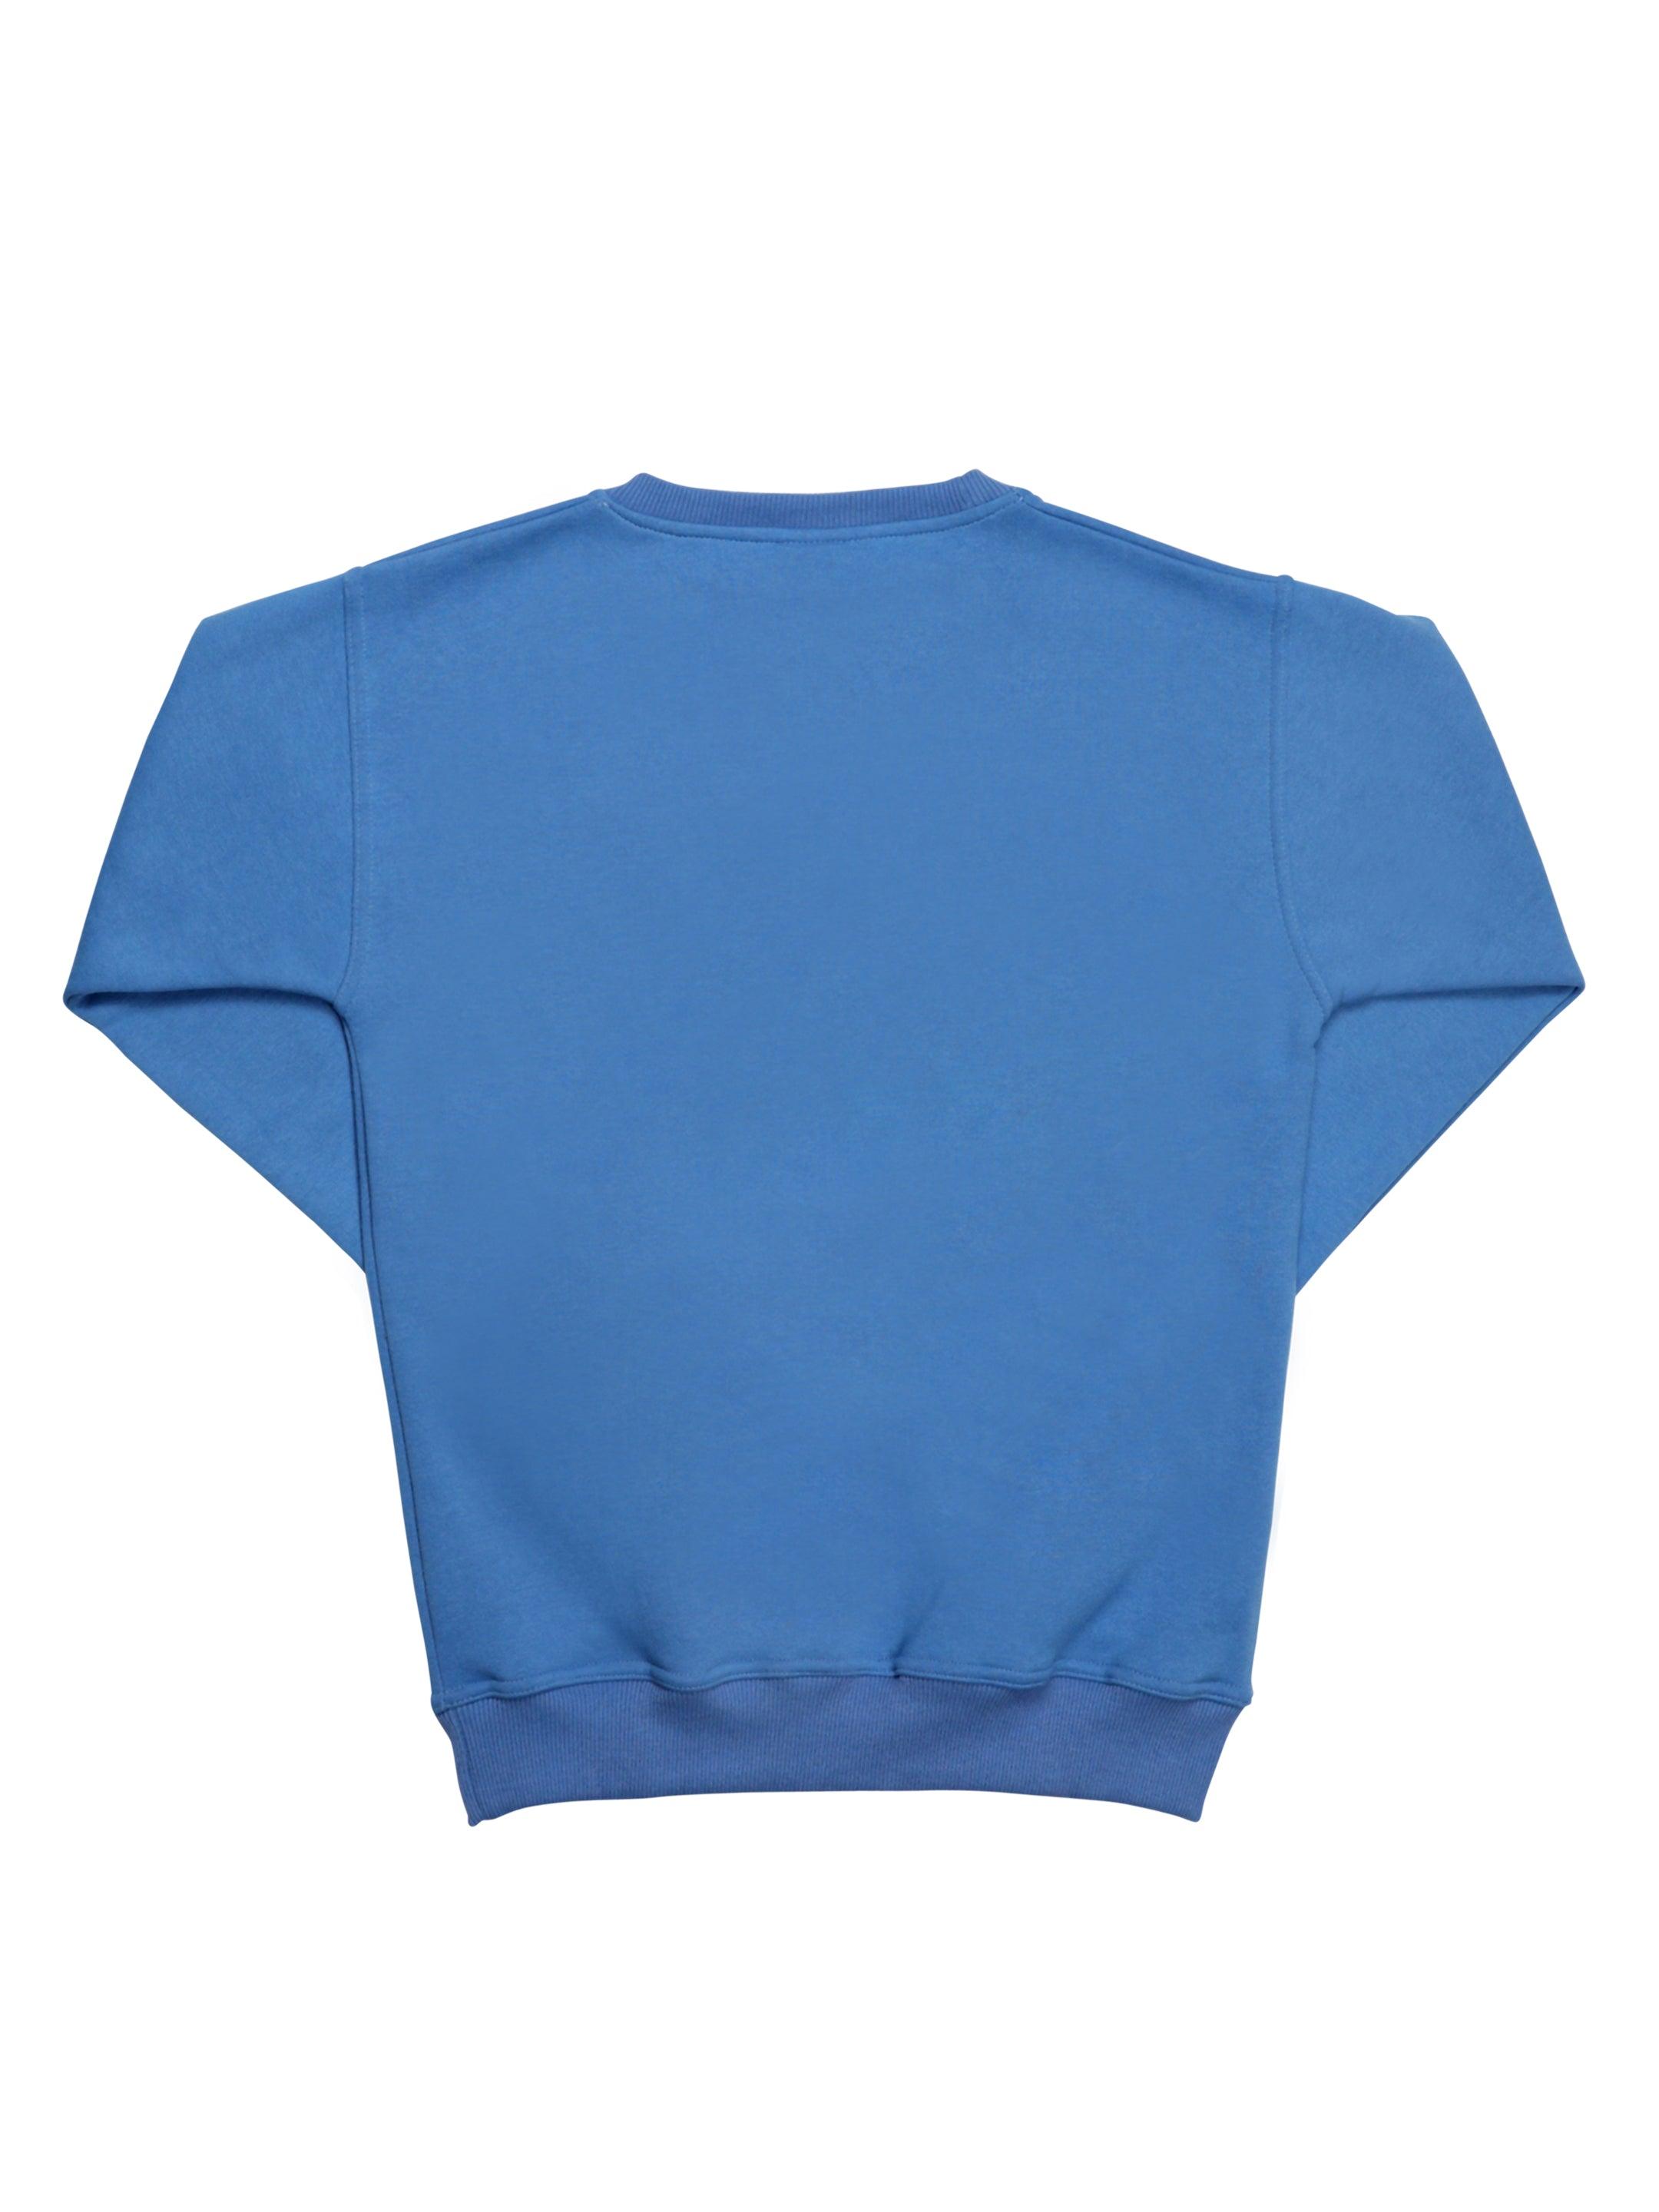 PBW Sweatshirt (Blue) 3D Embroidery